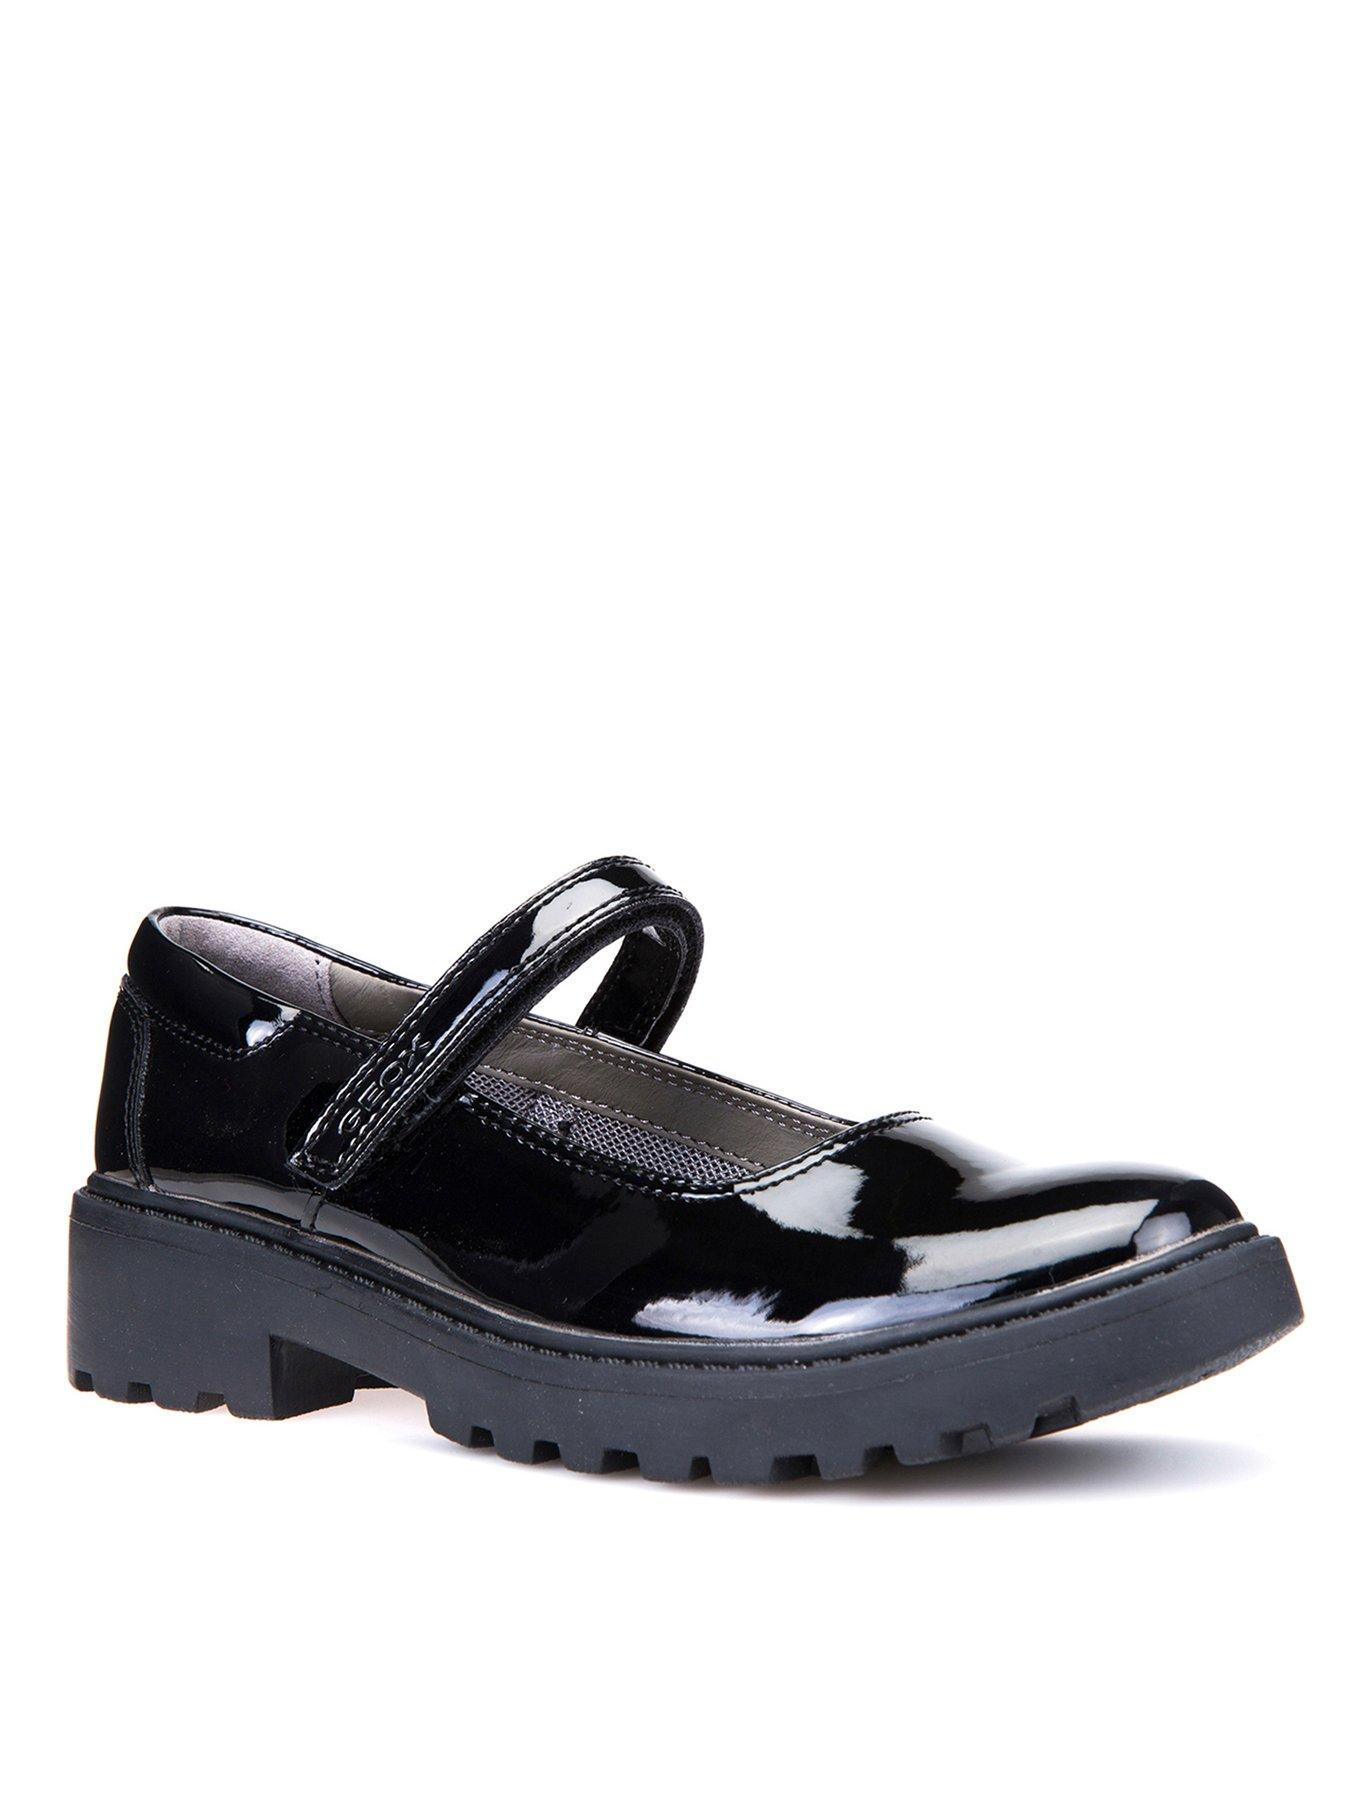  Girls Casey Patent Mary Jane School Shoe - Black